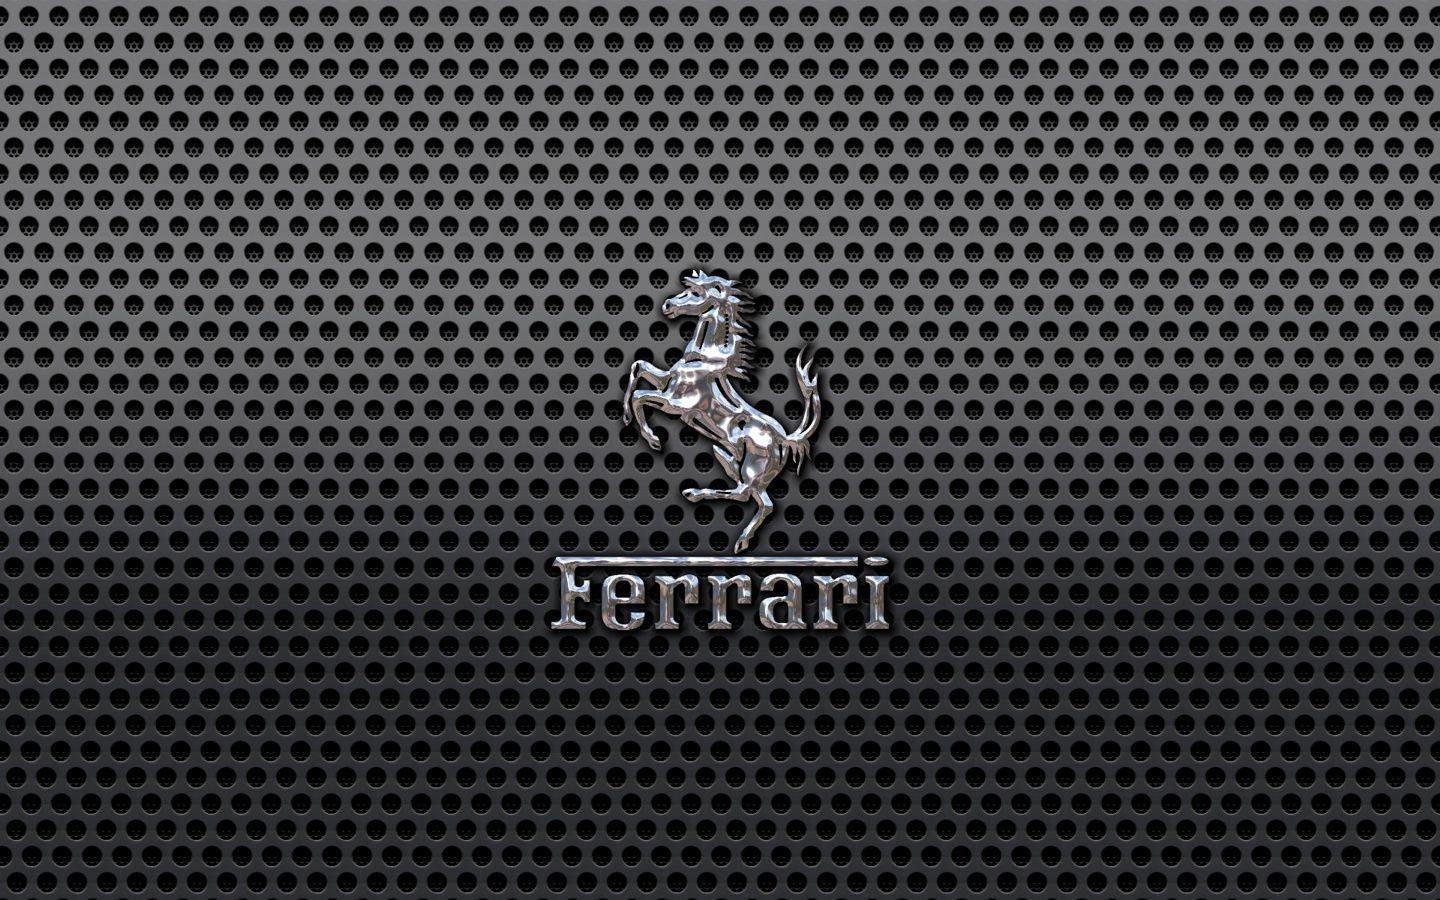 Ferrari Prancing Horse of Maranello logo on a black metal mesh wallpaper 1440×900